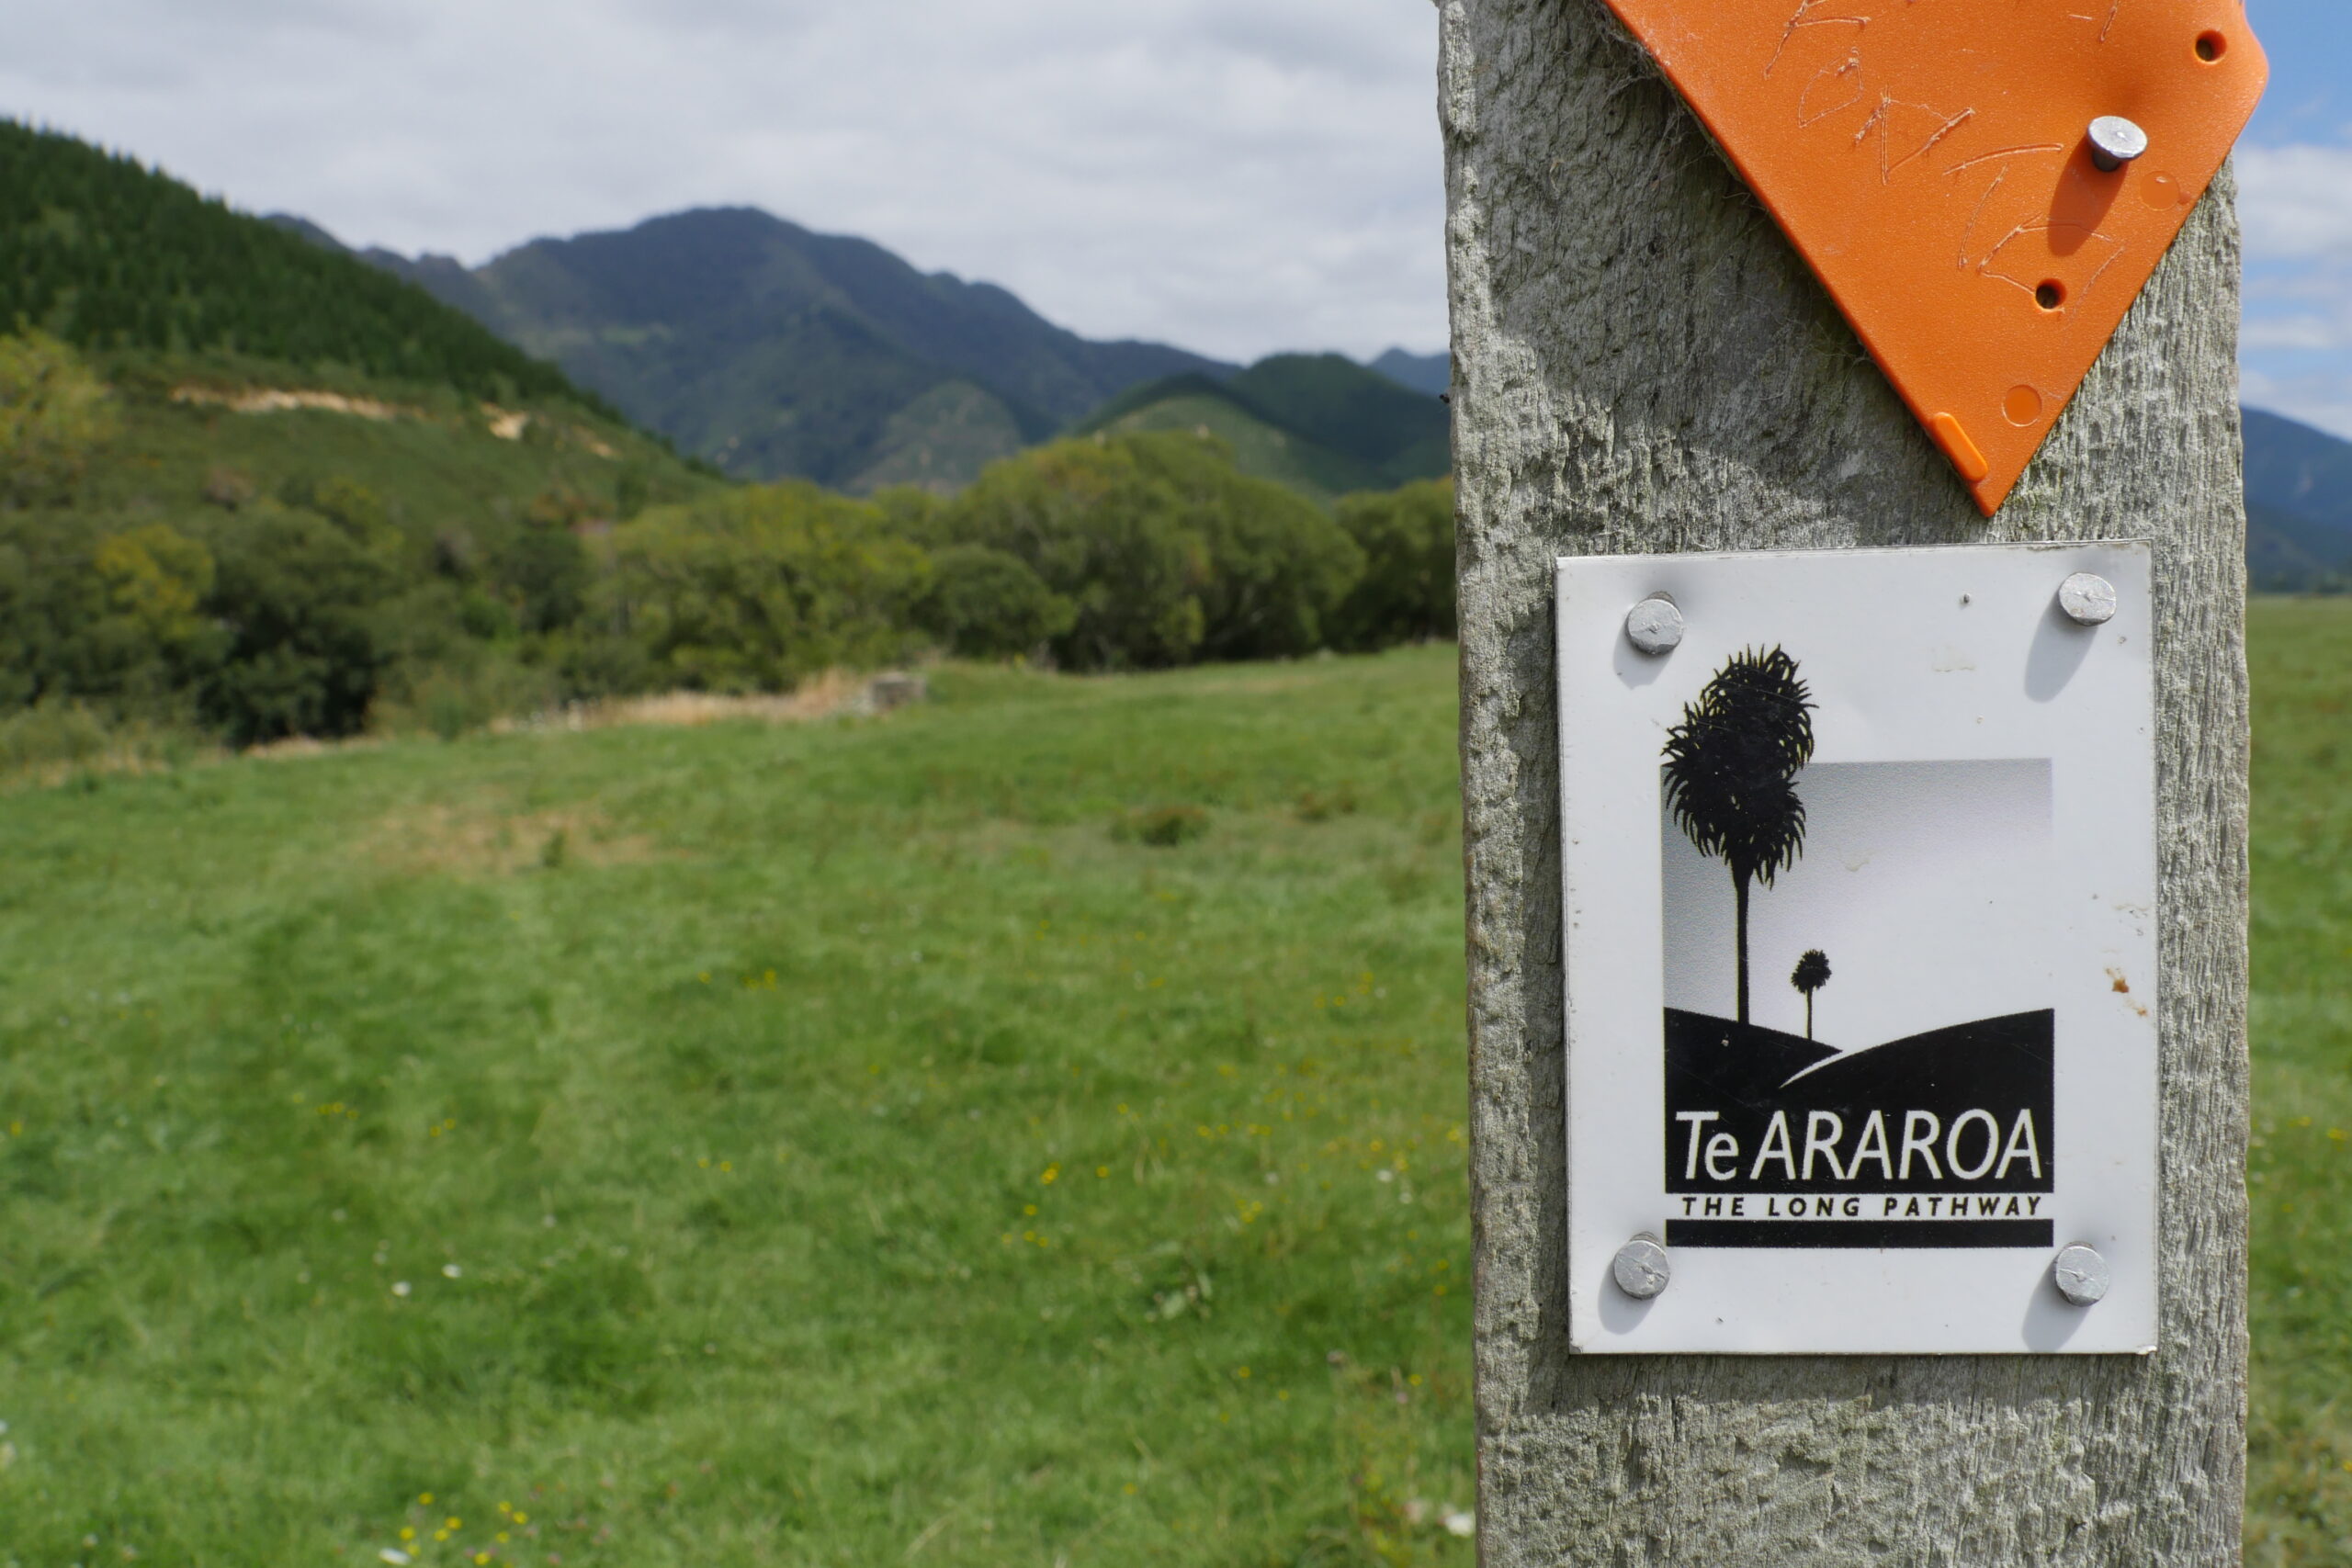 A sign directs Te Araroa hikers near Havelock, New Zealand.